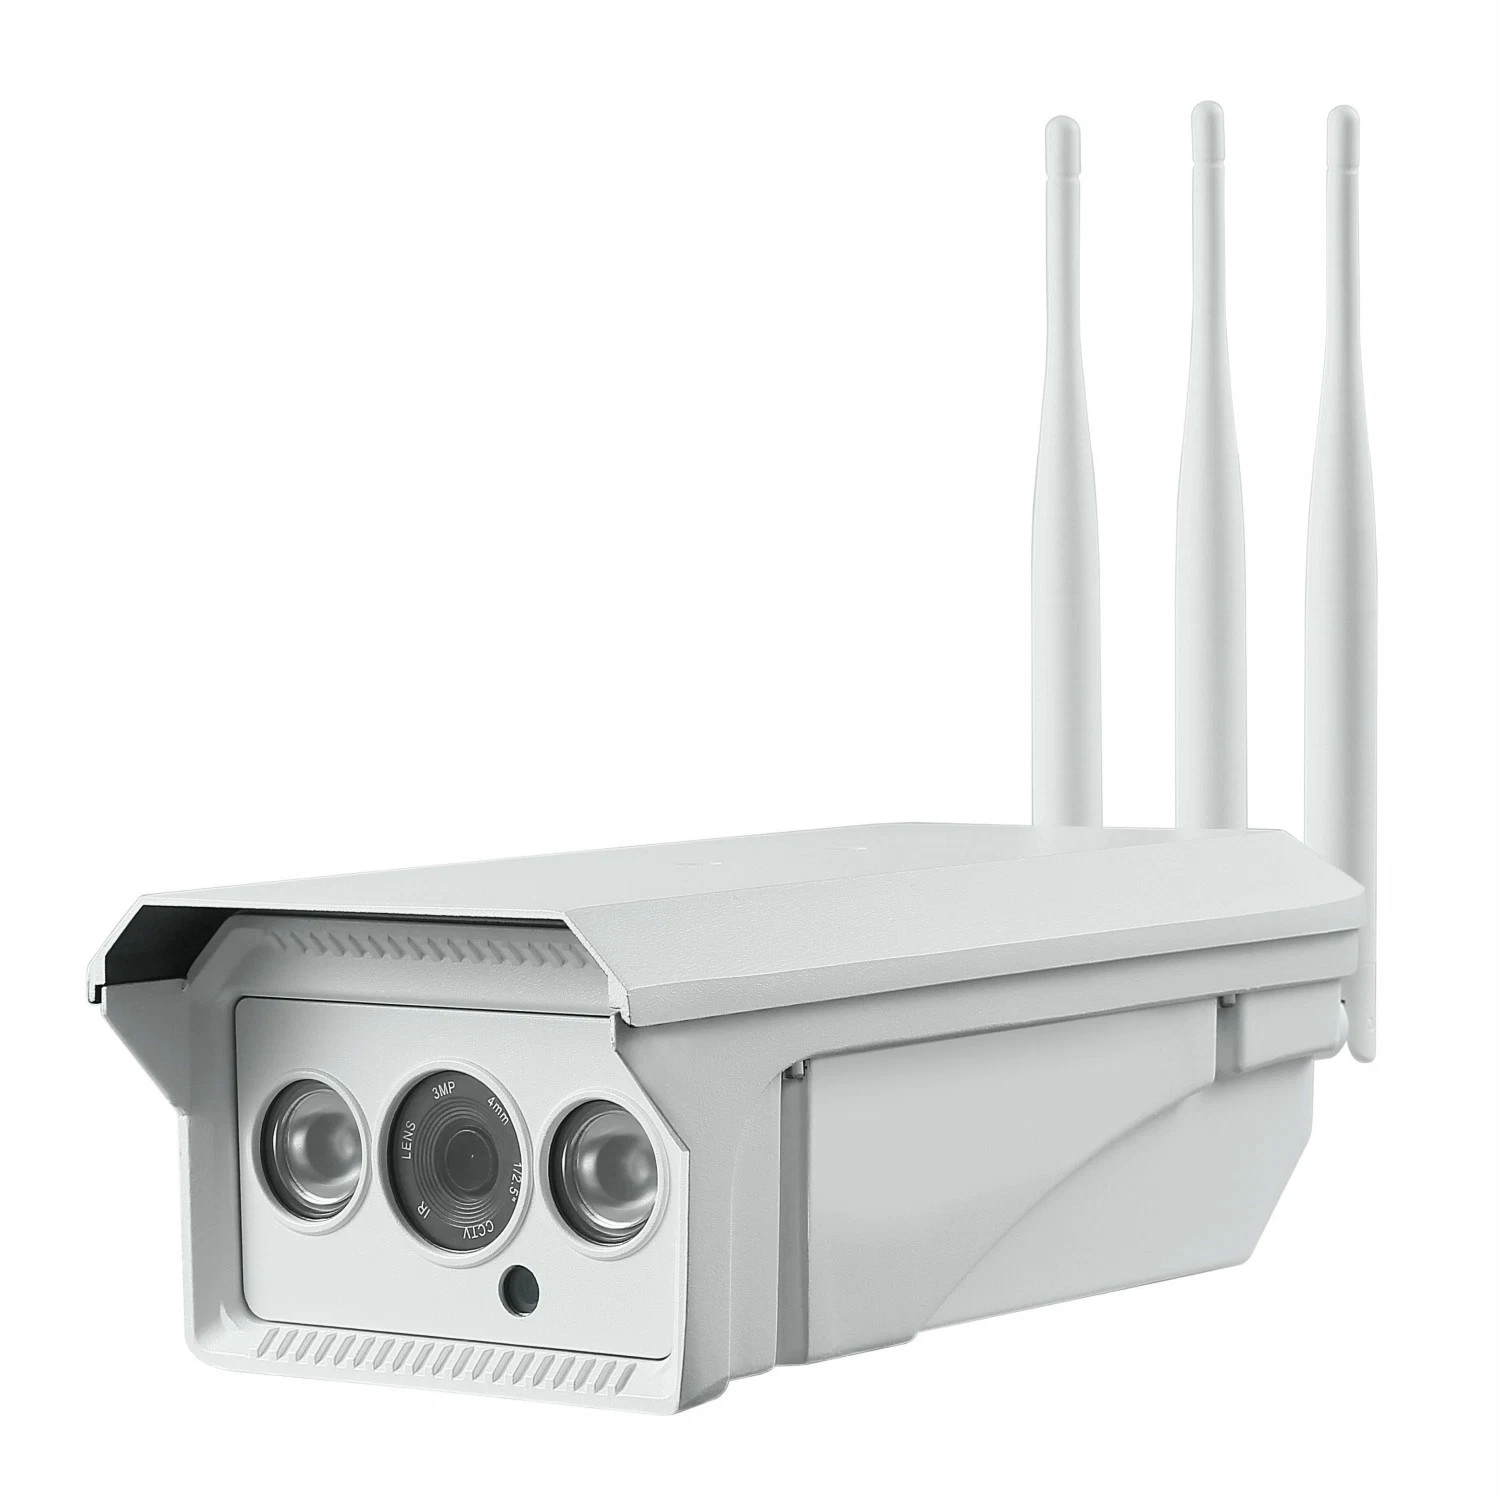 P2p 2.0MP 4G Outdoor Security WiFi Wireless Waterproof Video CCTV IP Camera